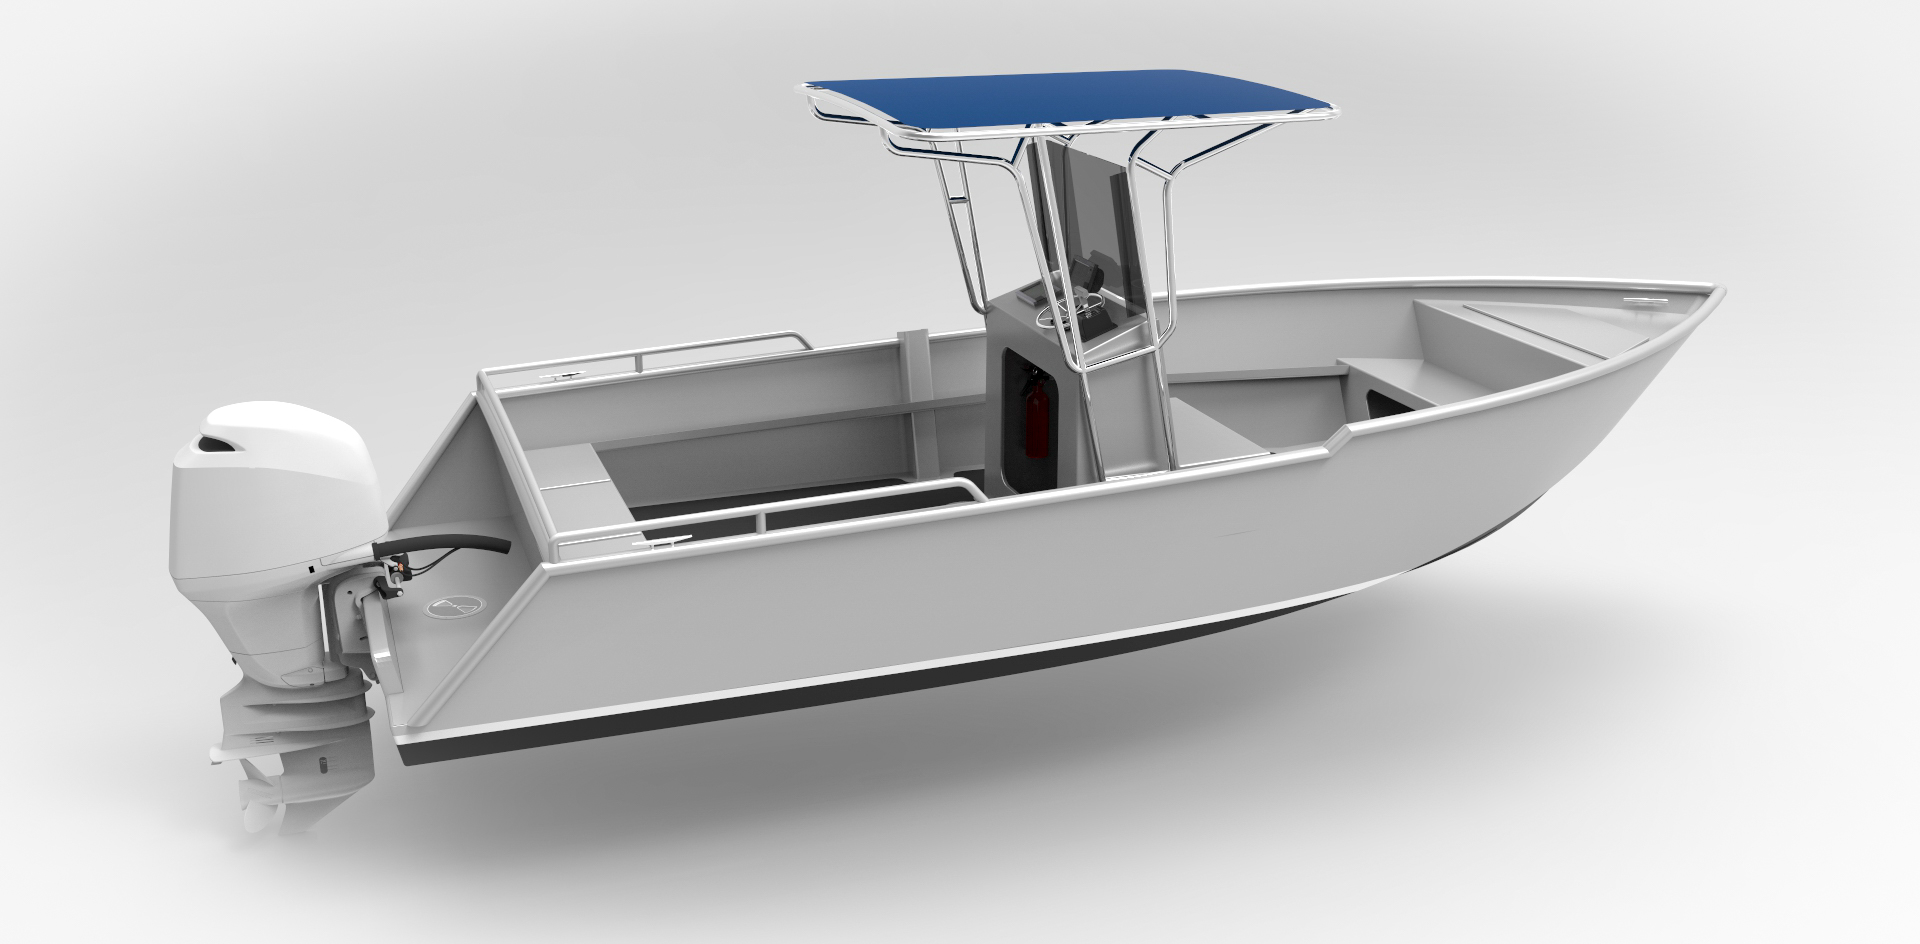 walkaround 20 - metal boat kits